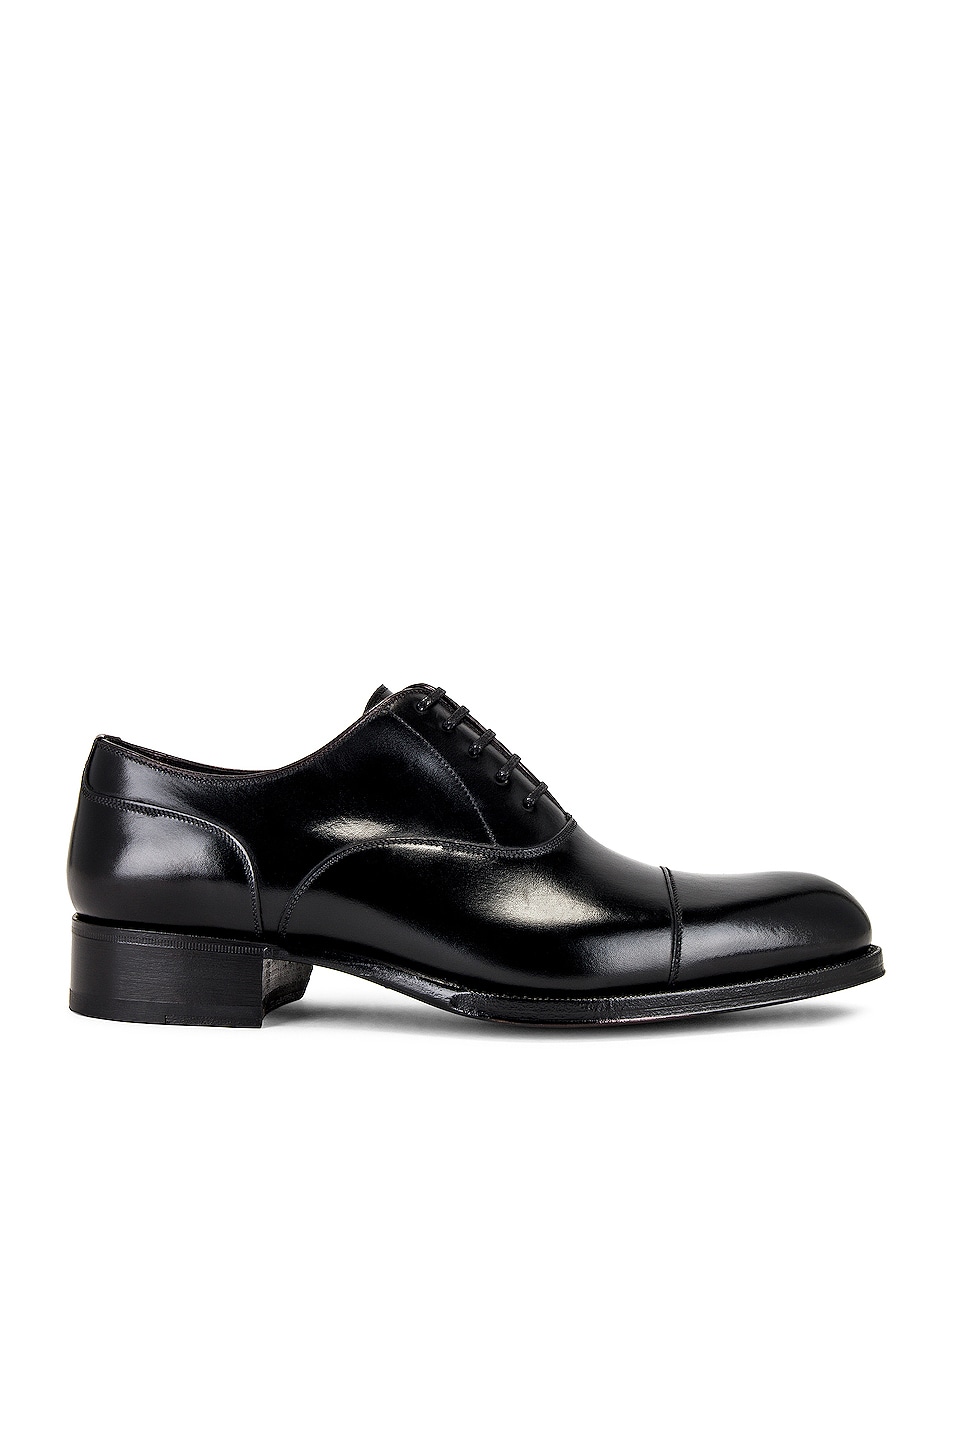 Edgar Lace Up Dress Shoe in Black